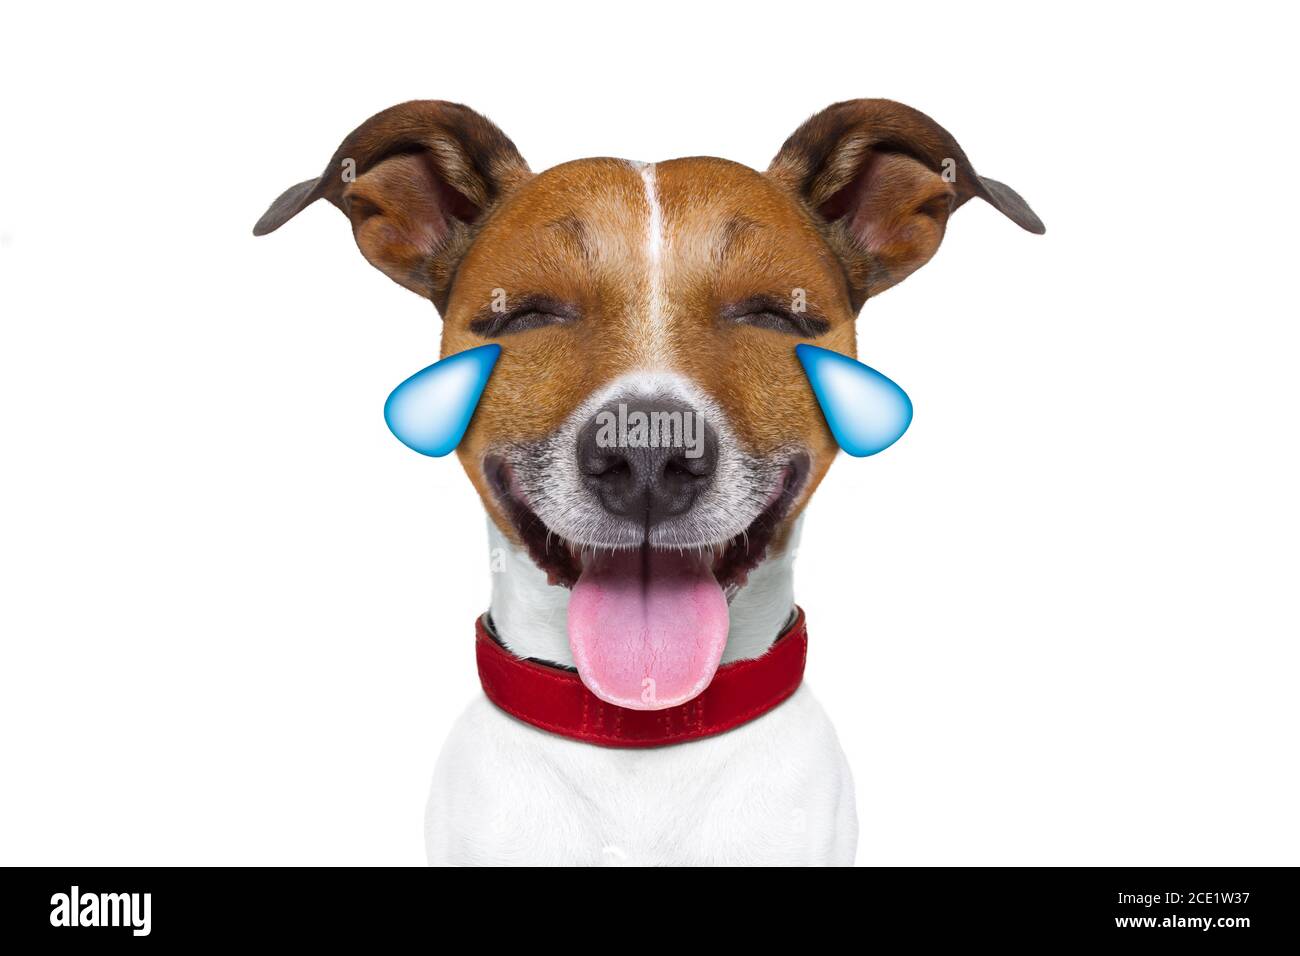 emoticon or  Emoji dumb  crying laughing dog Stock Photo